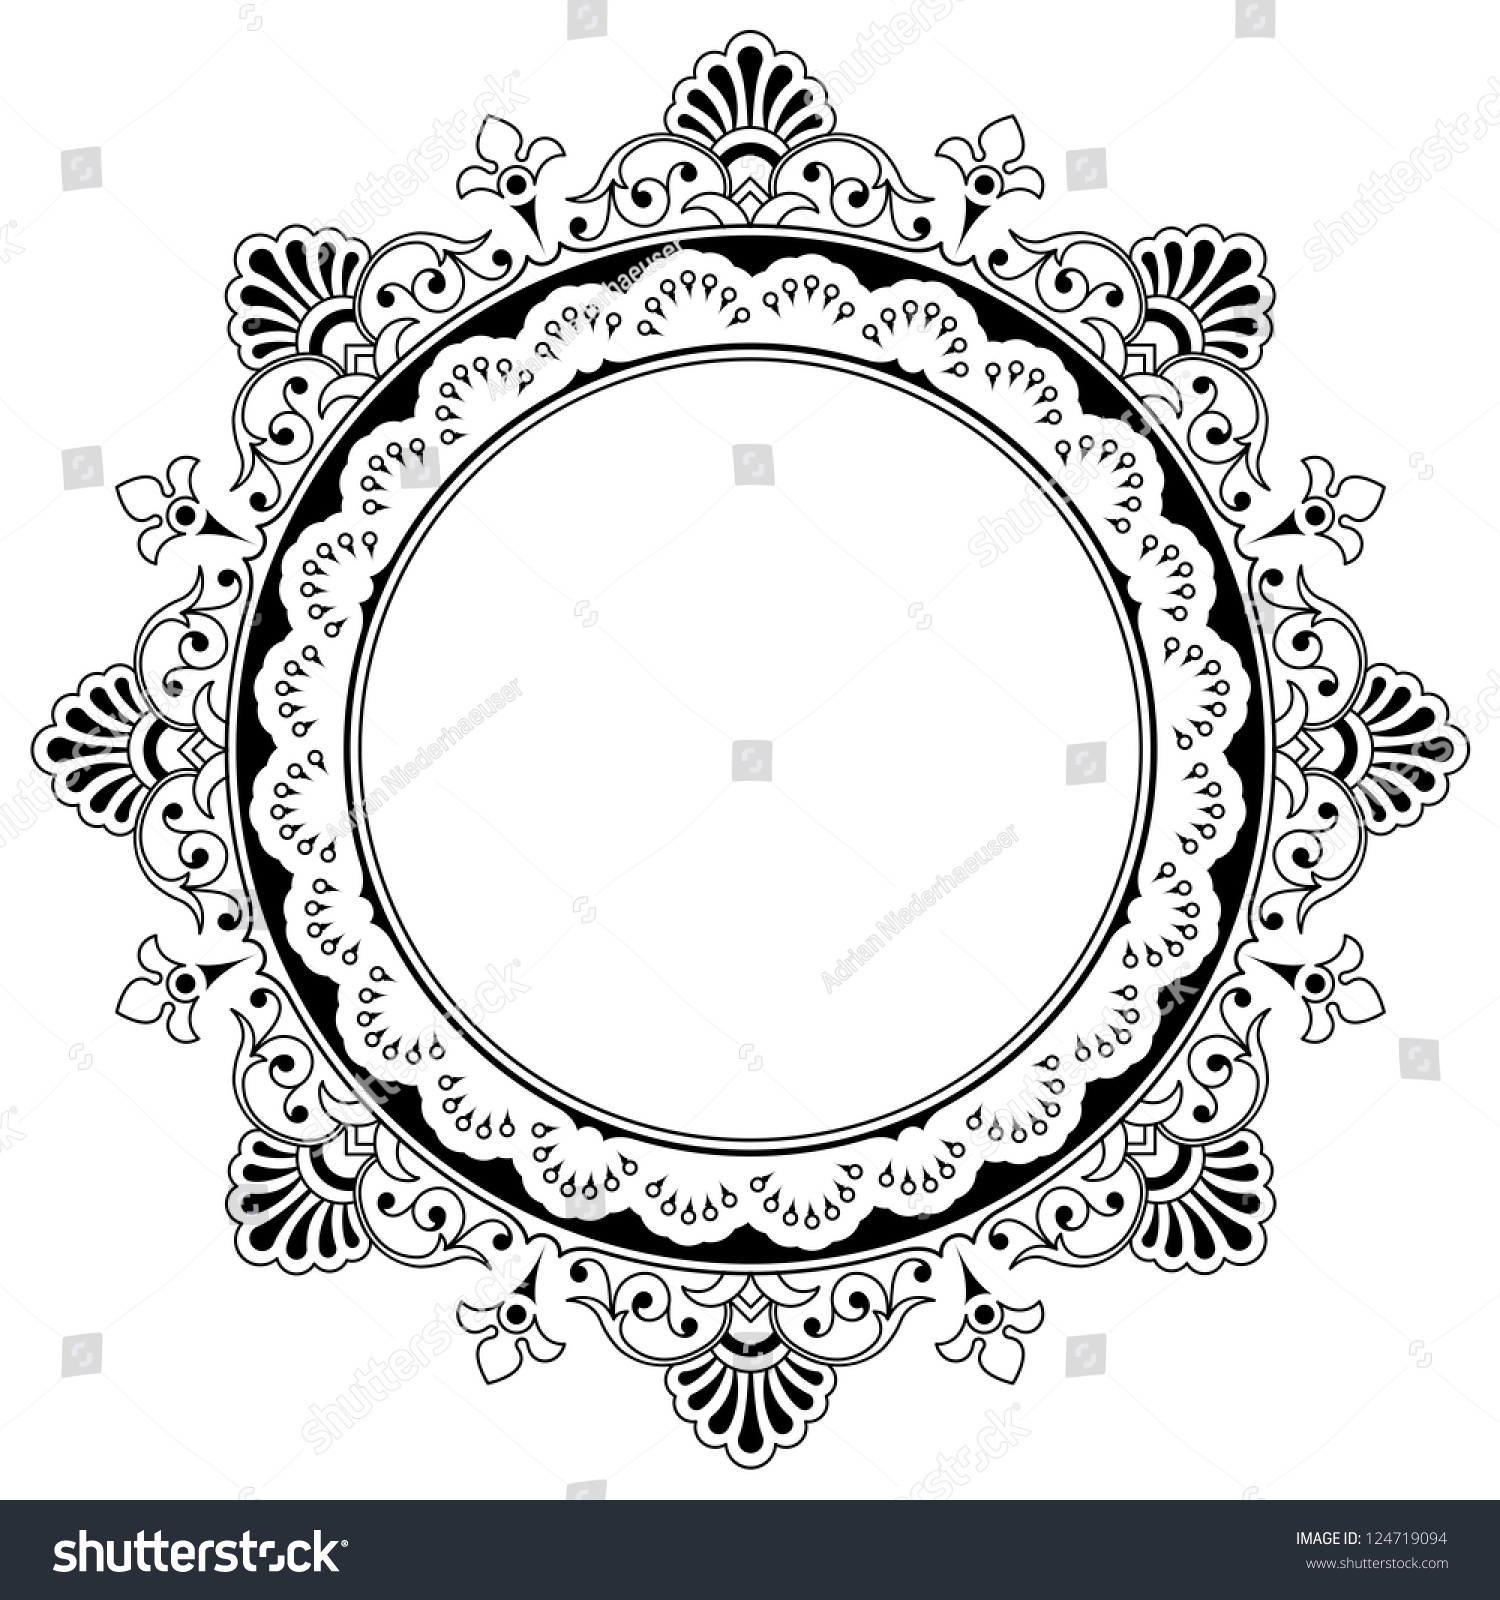 lace circle clip art free - photo #45